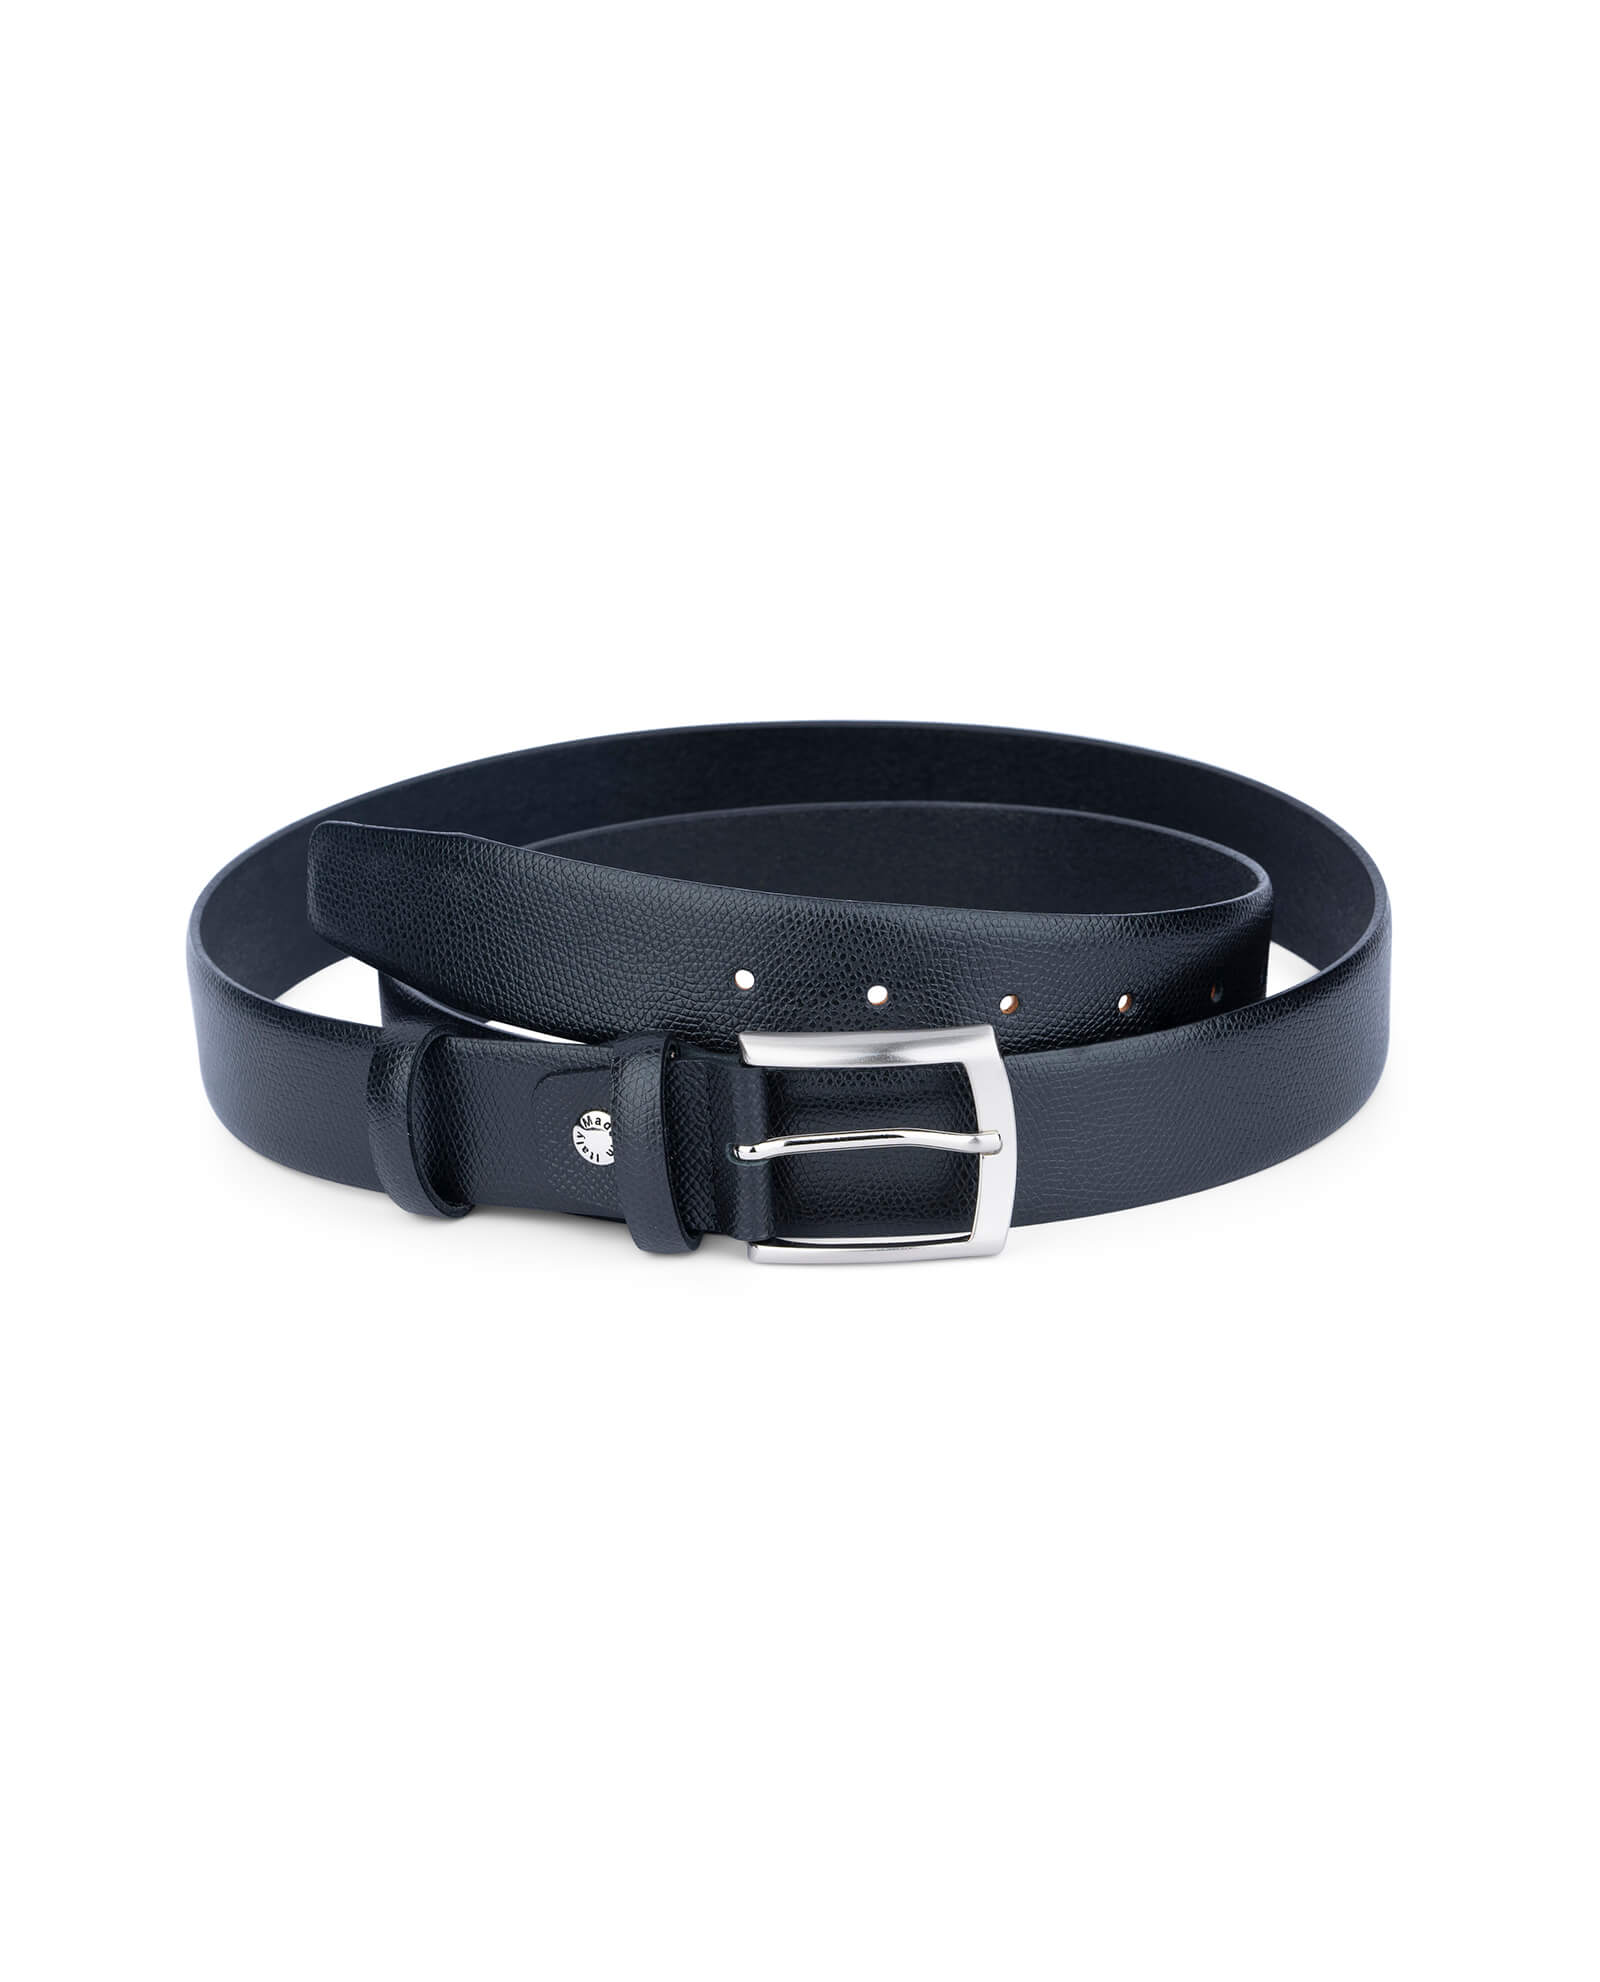 Buy Men's Saffiano Classic Leather Belt - Capo Pelle - Free Shipping